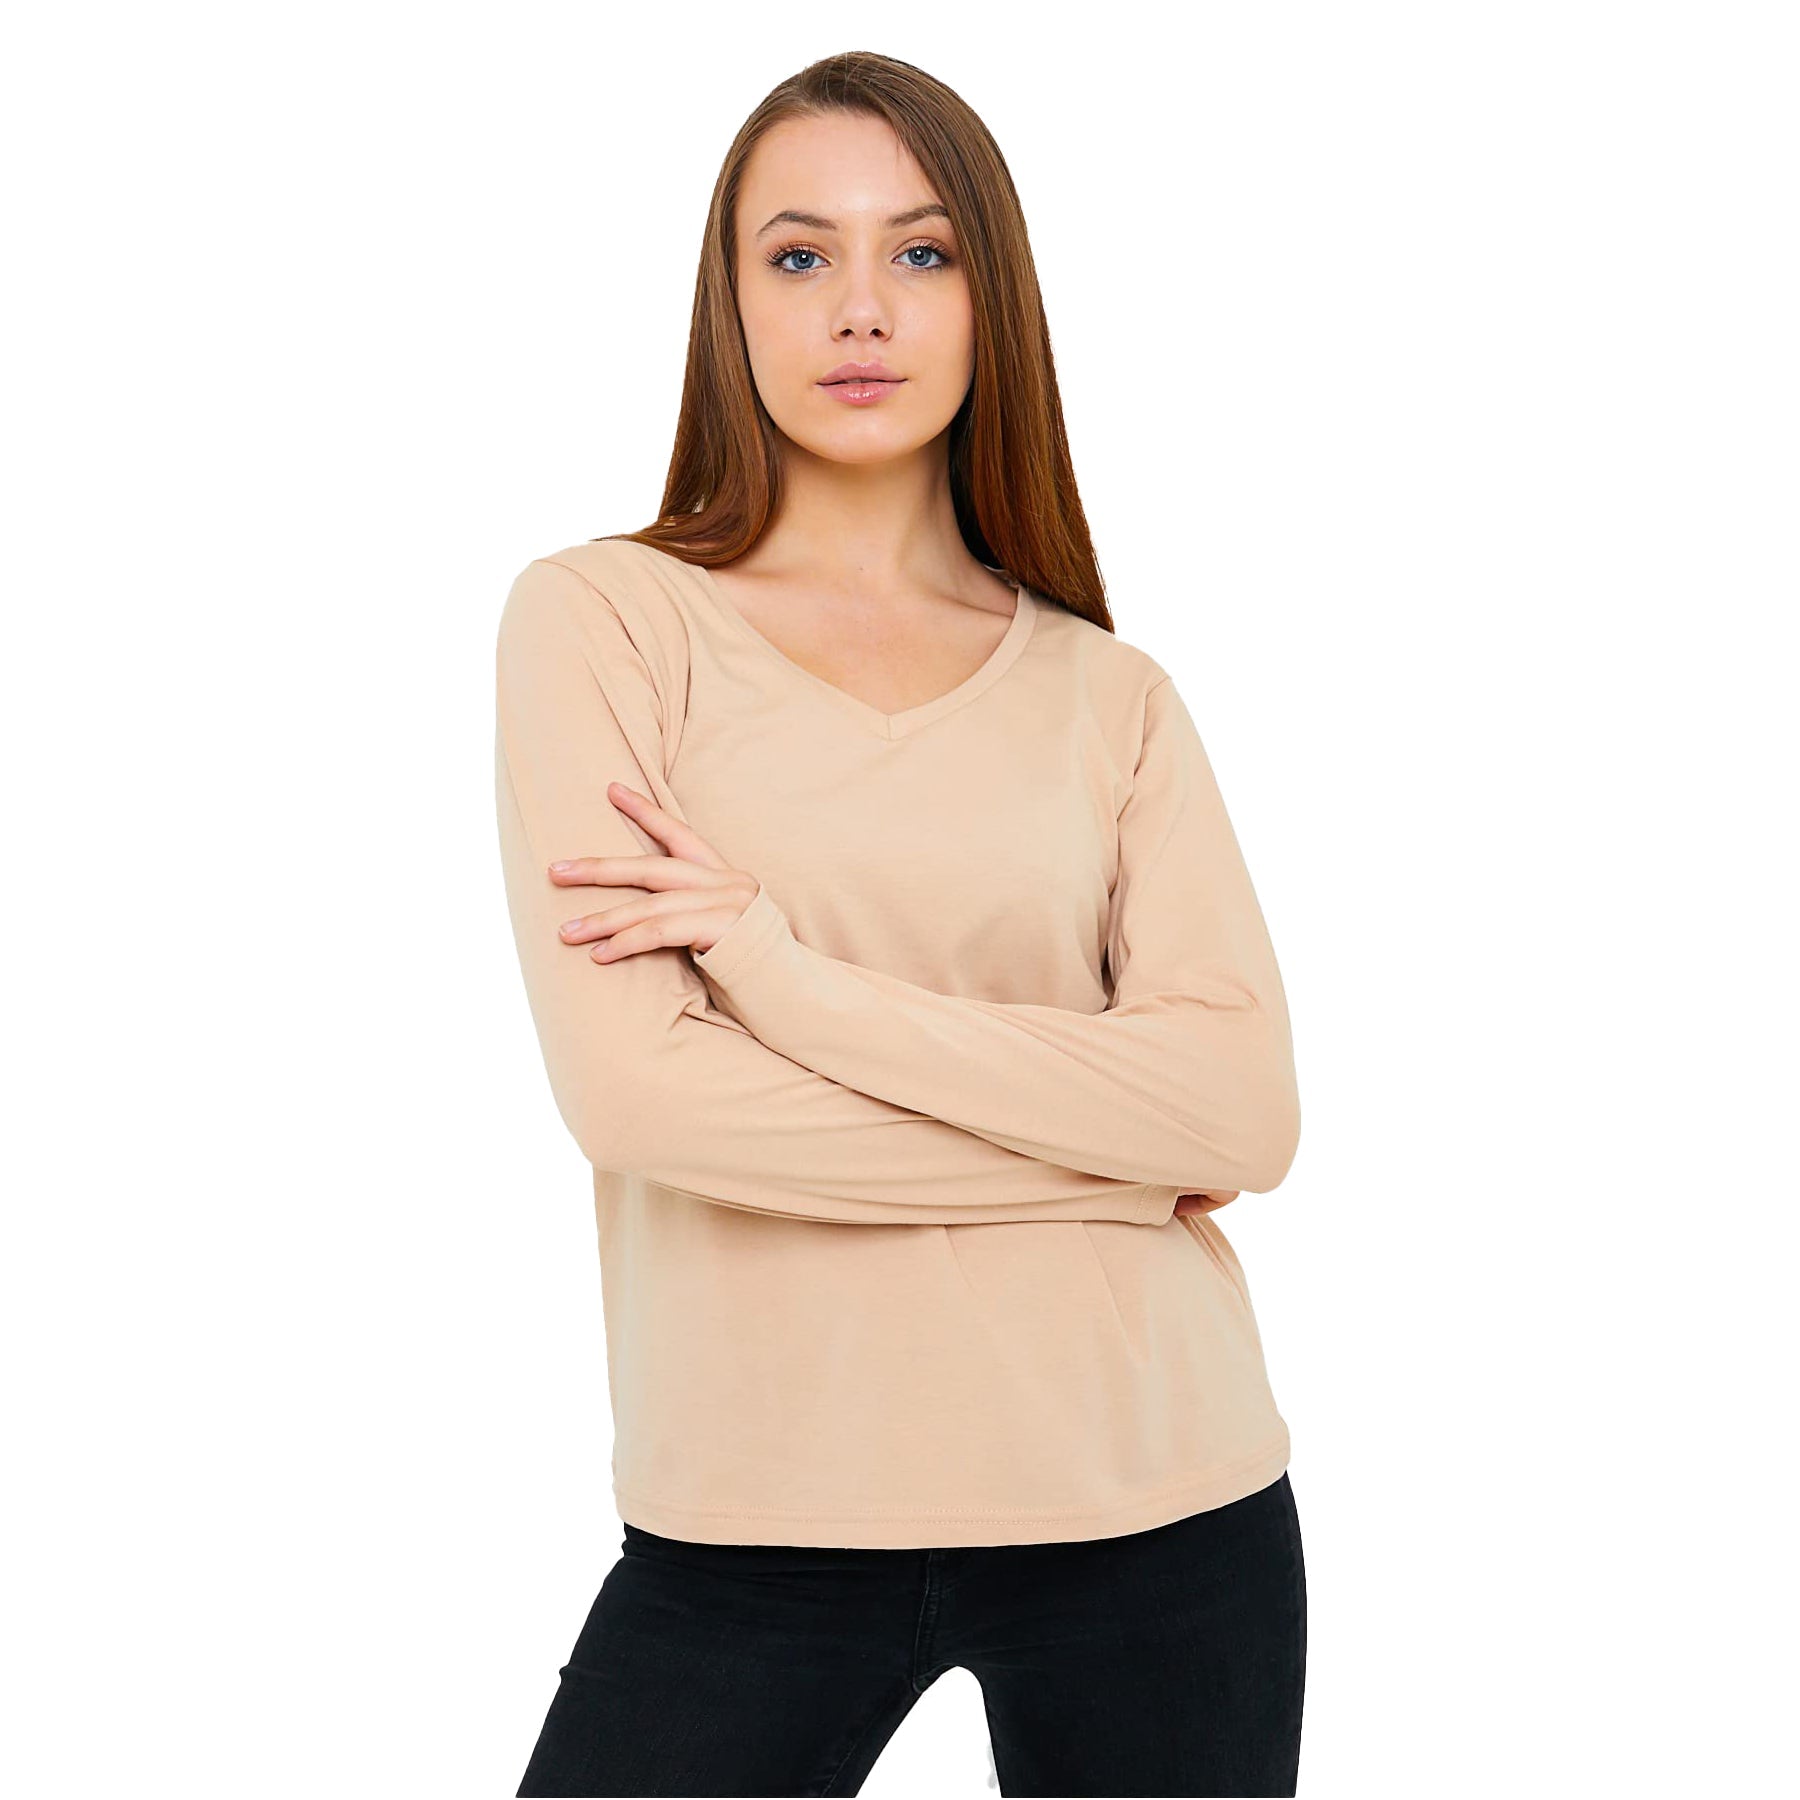 Buy sand Long Sleeve V-Neck Shirts for Women &amp; Girls - Colorful Pima Cotton